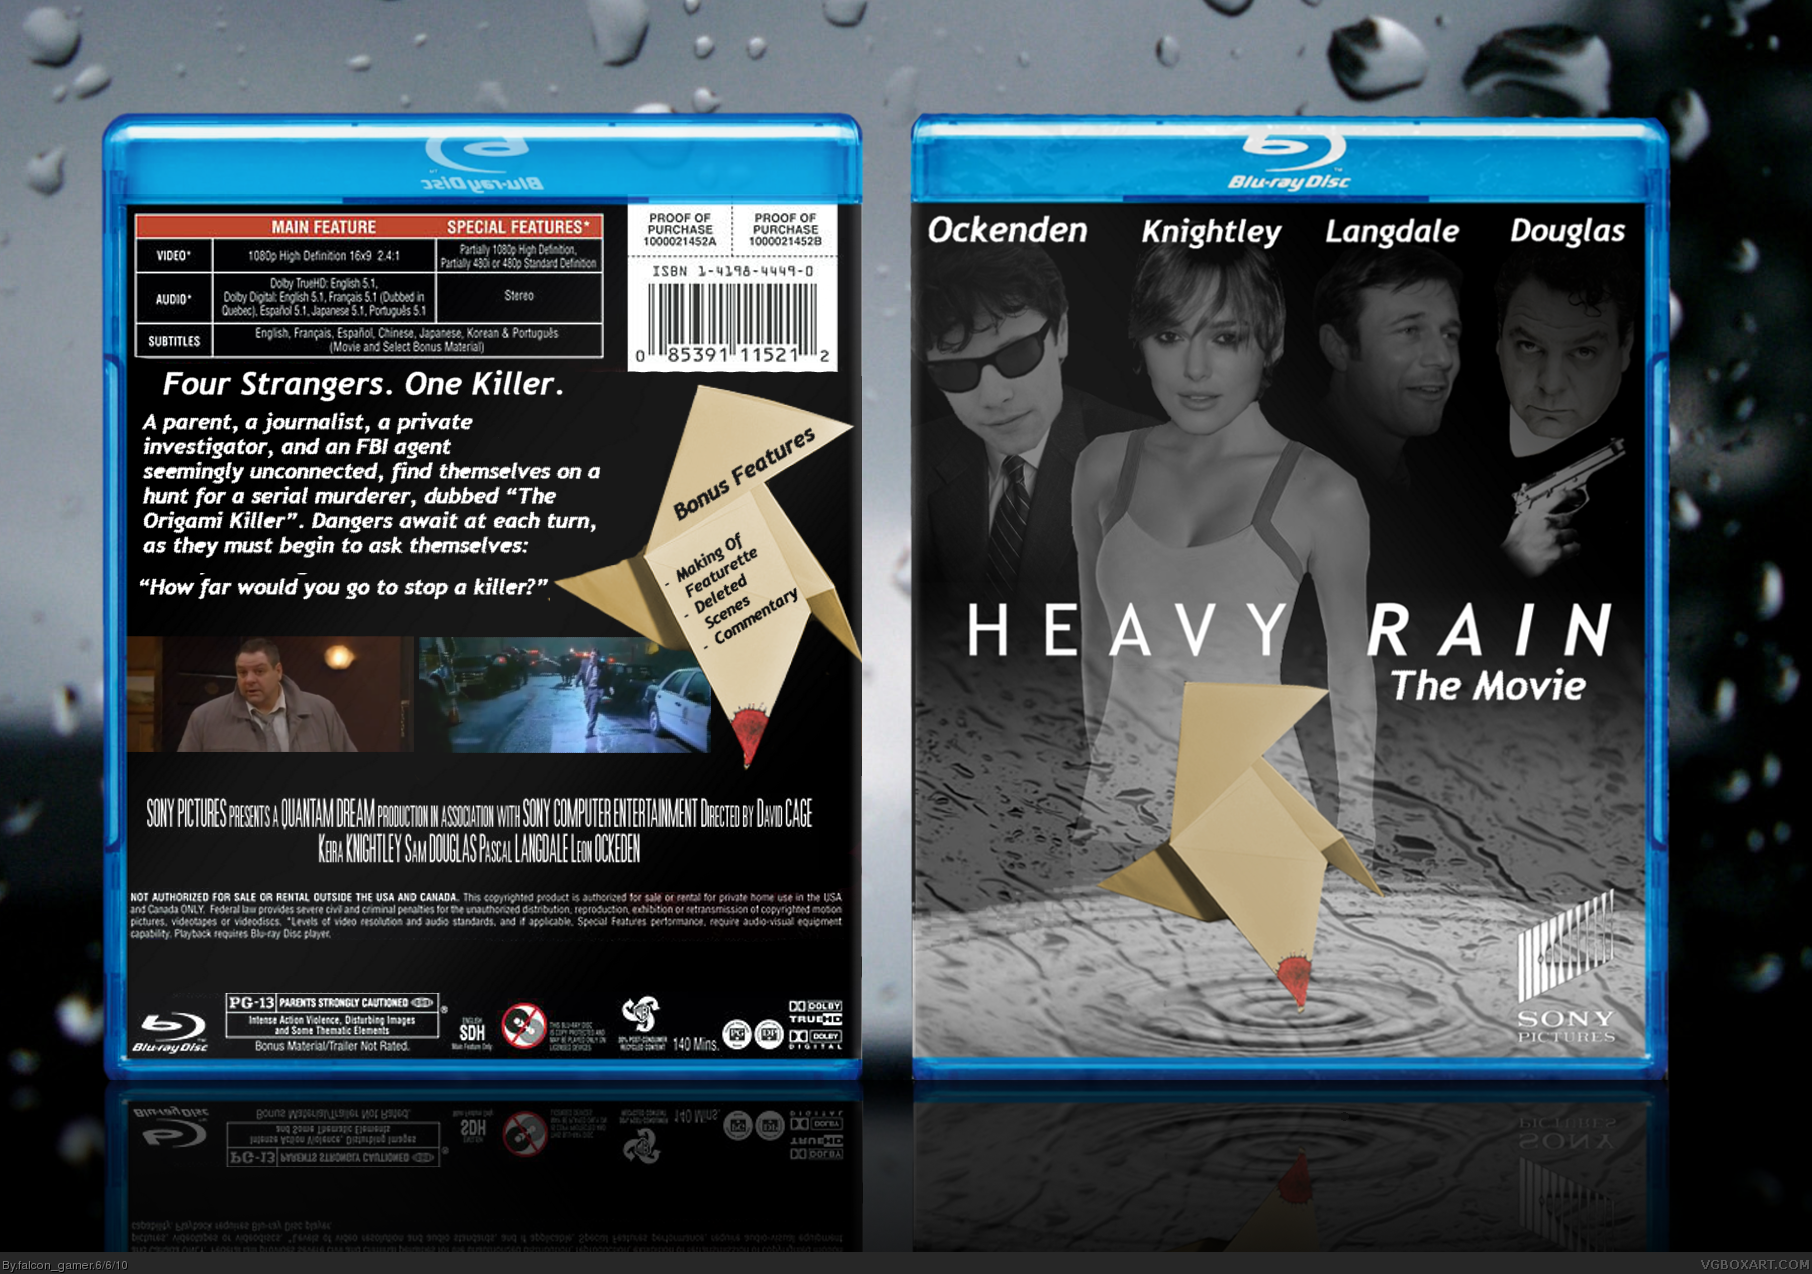 Heavy Rain The Movie box cover